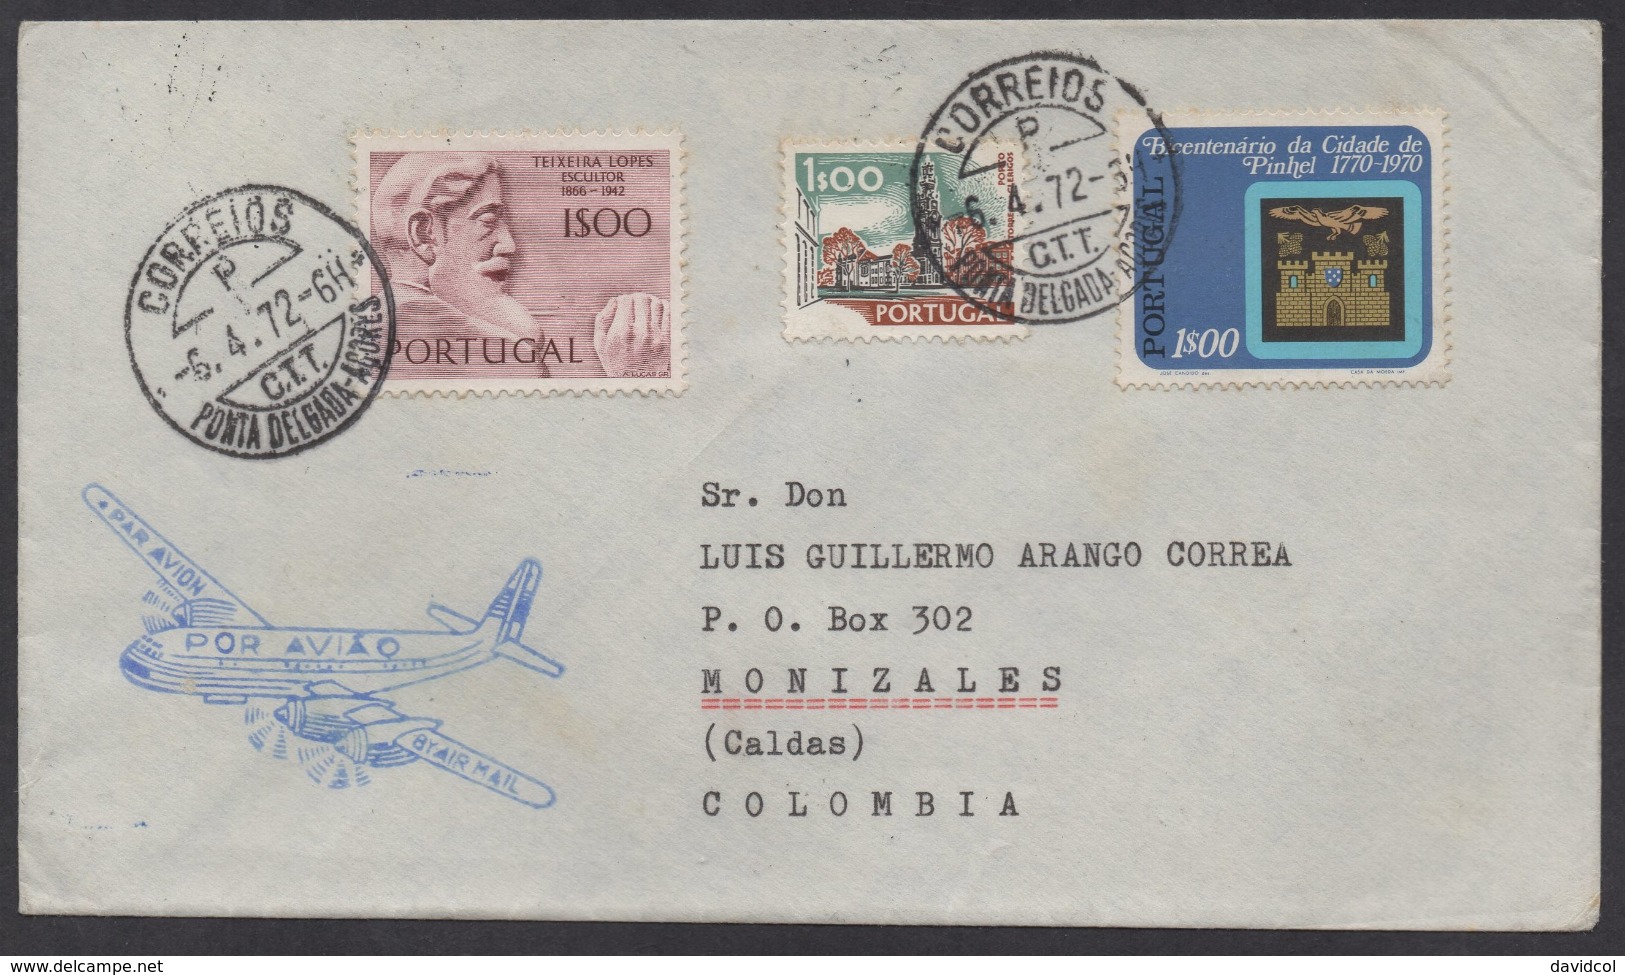 SA184- PORTUGAL-AZORES - 1972 - PONTA DELGADA 6-4-72 TO MANIZALES-CALDAS-COLOMBIA 12-IV-72 - Afrique Portugaise